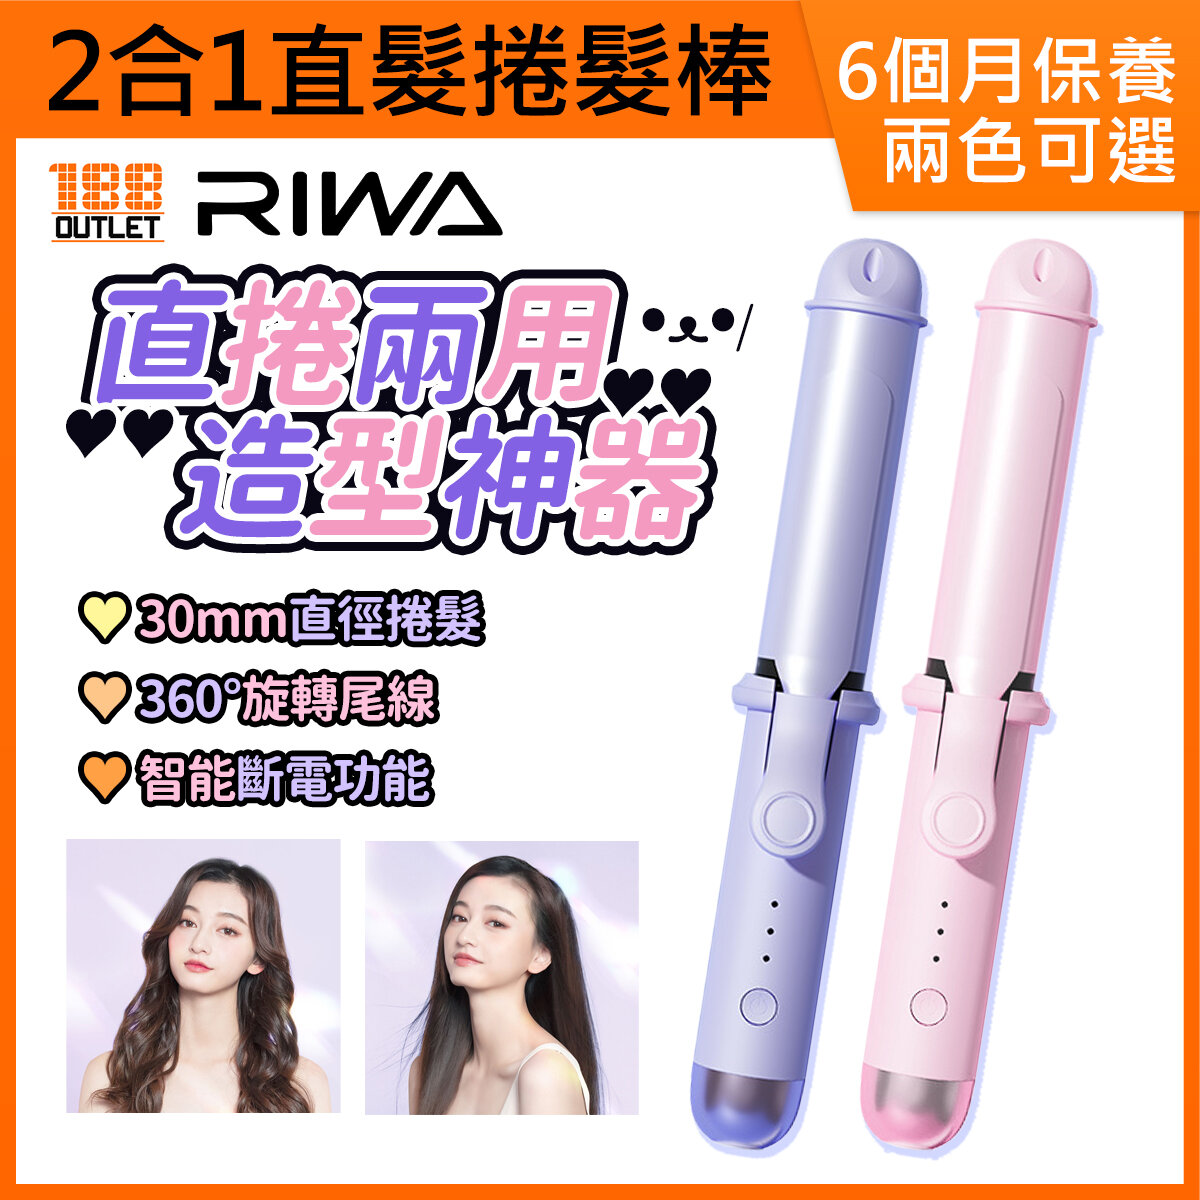 RIWA Mini Hair Straightener Curler / Curling Iron RB8125 Purple [Parallel Import]